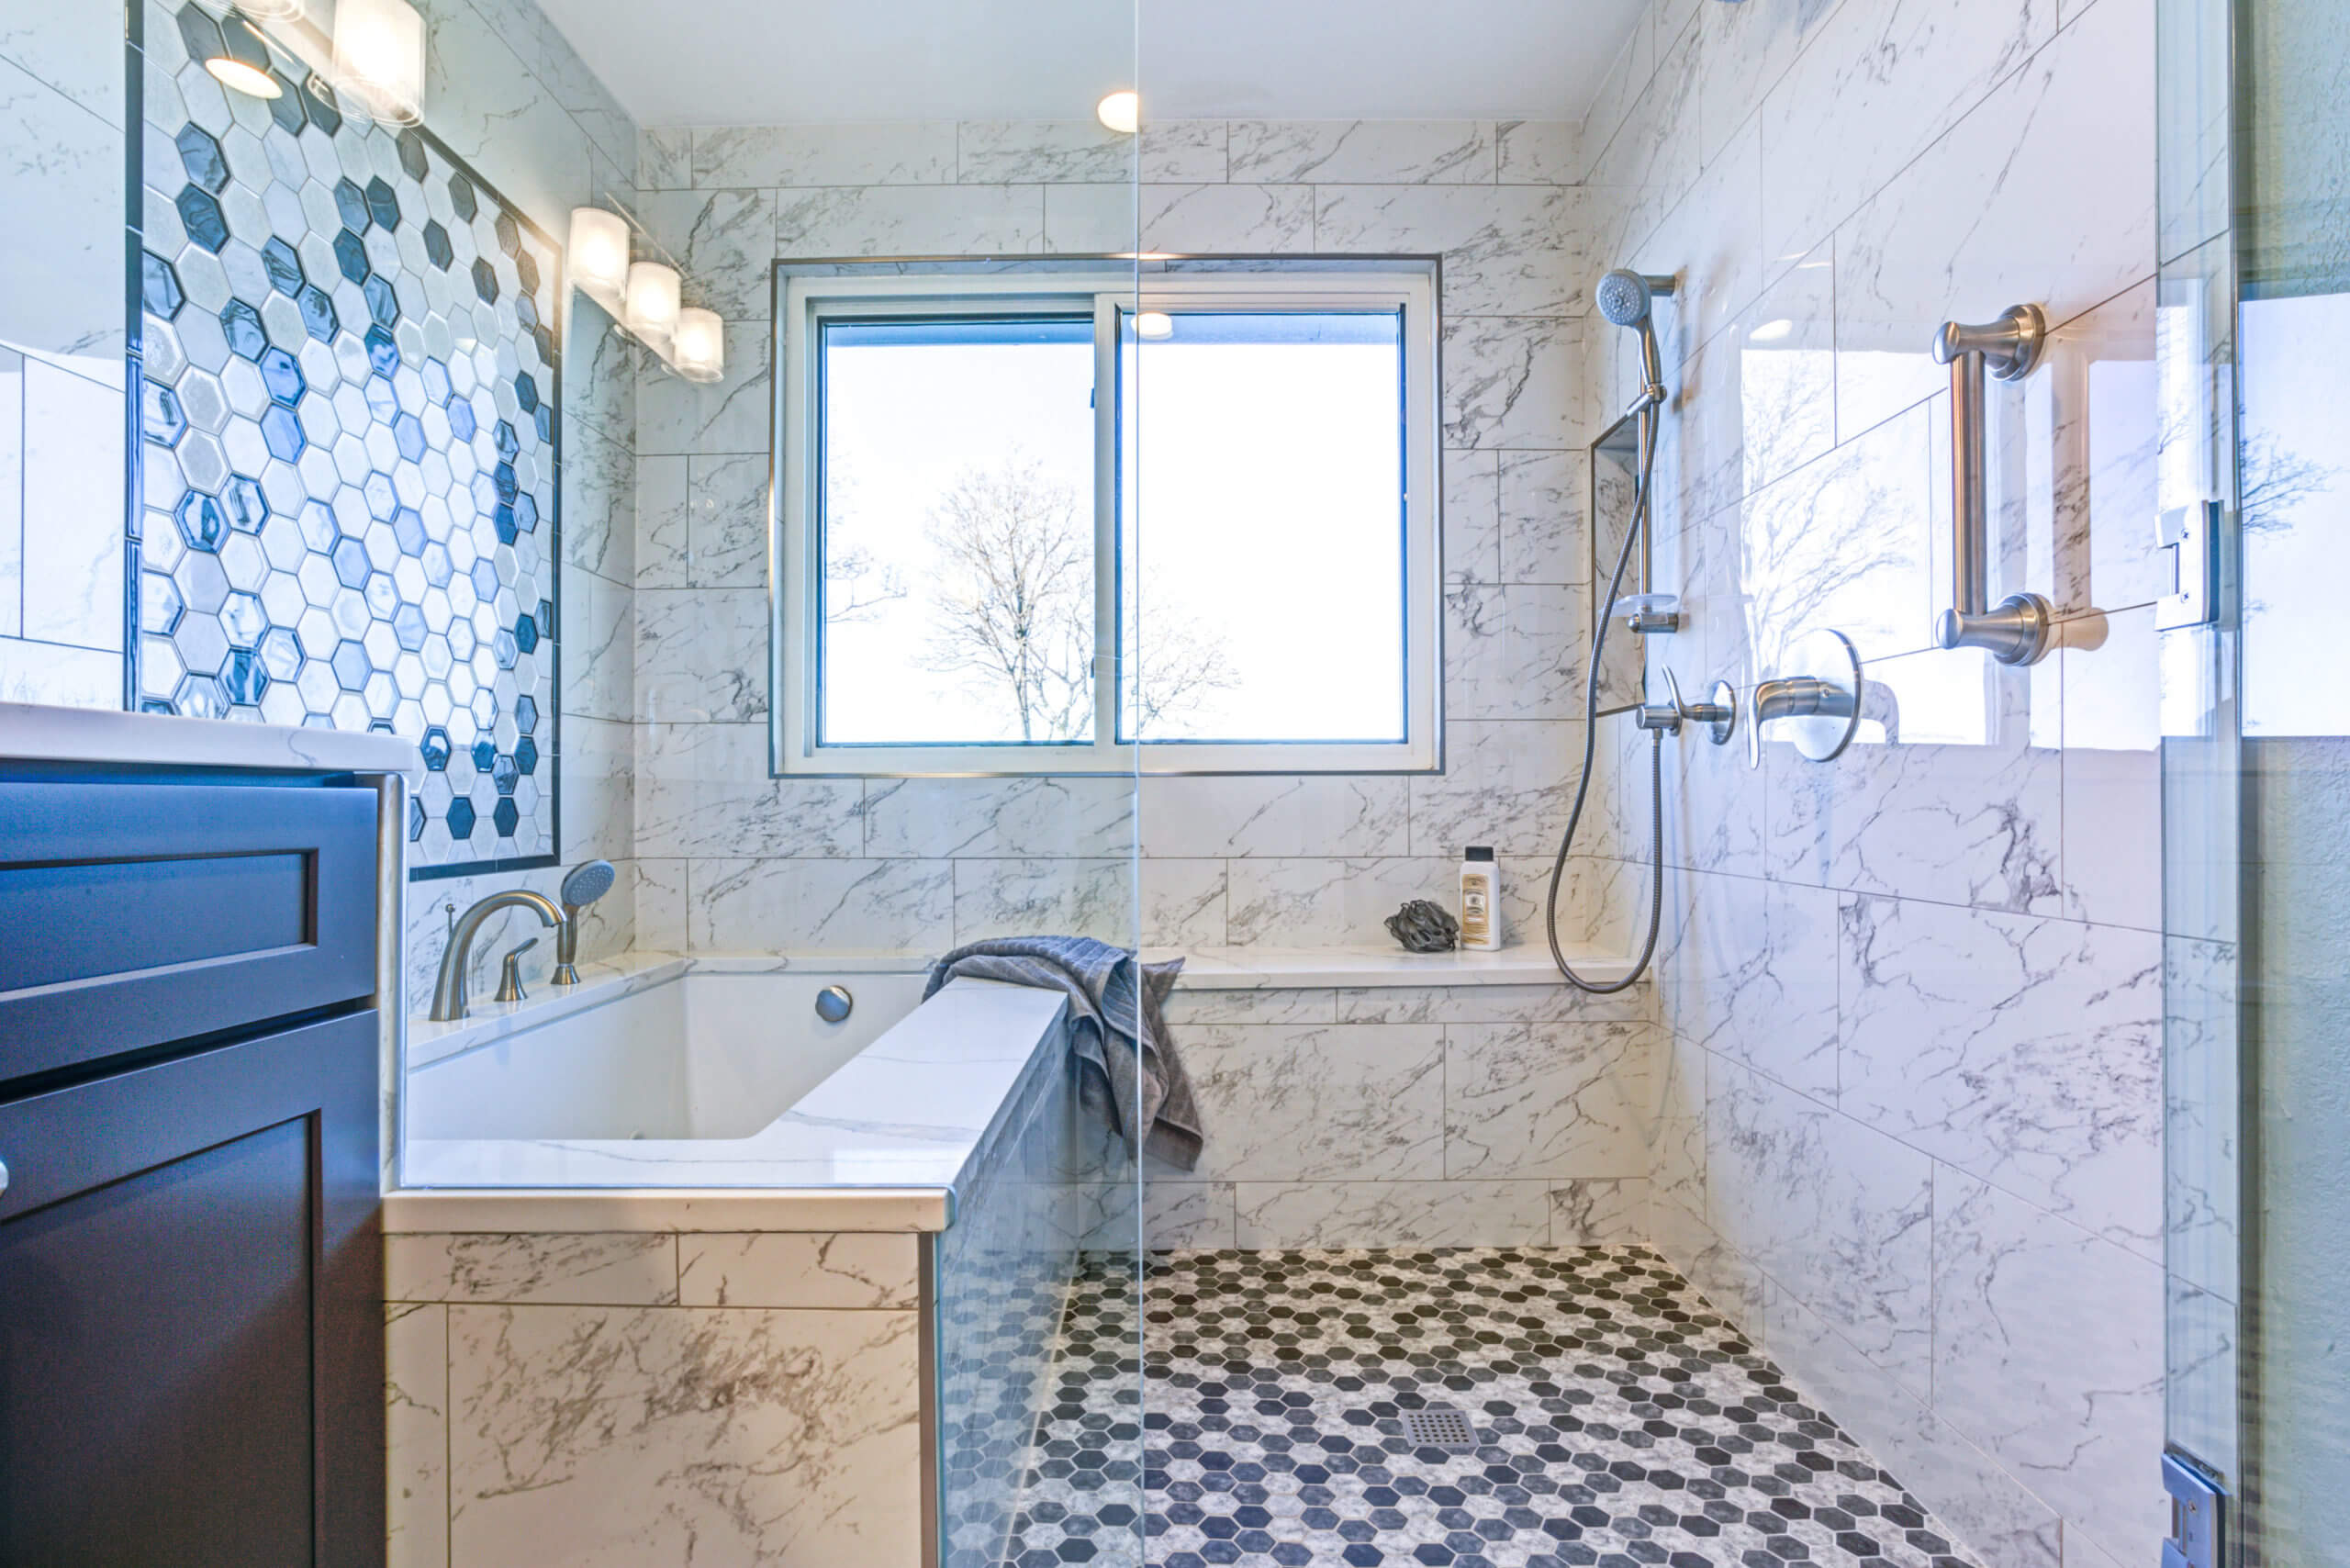 Framed Sliding Shower Door - Kitchen & Bath Design News